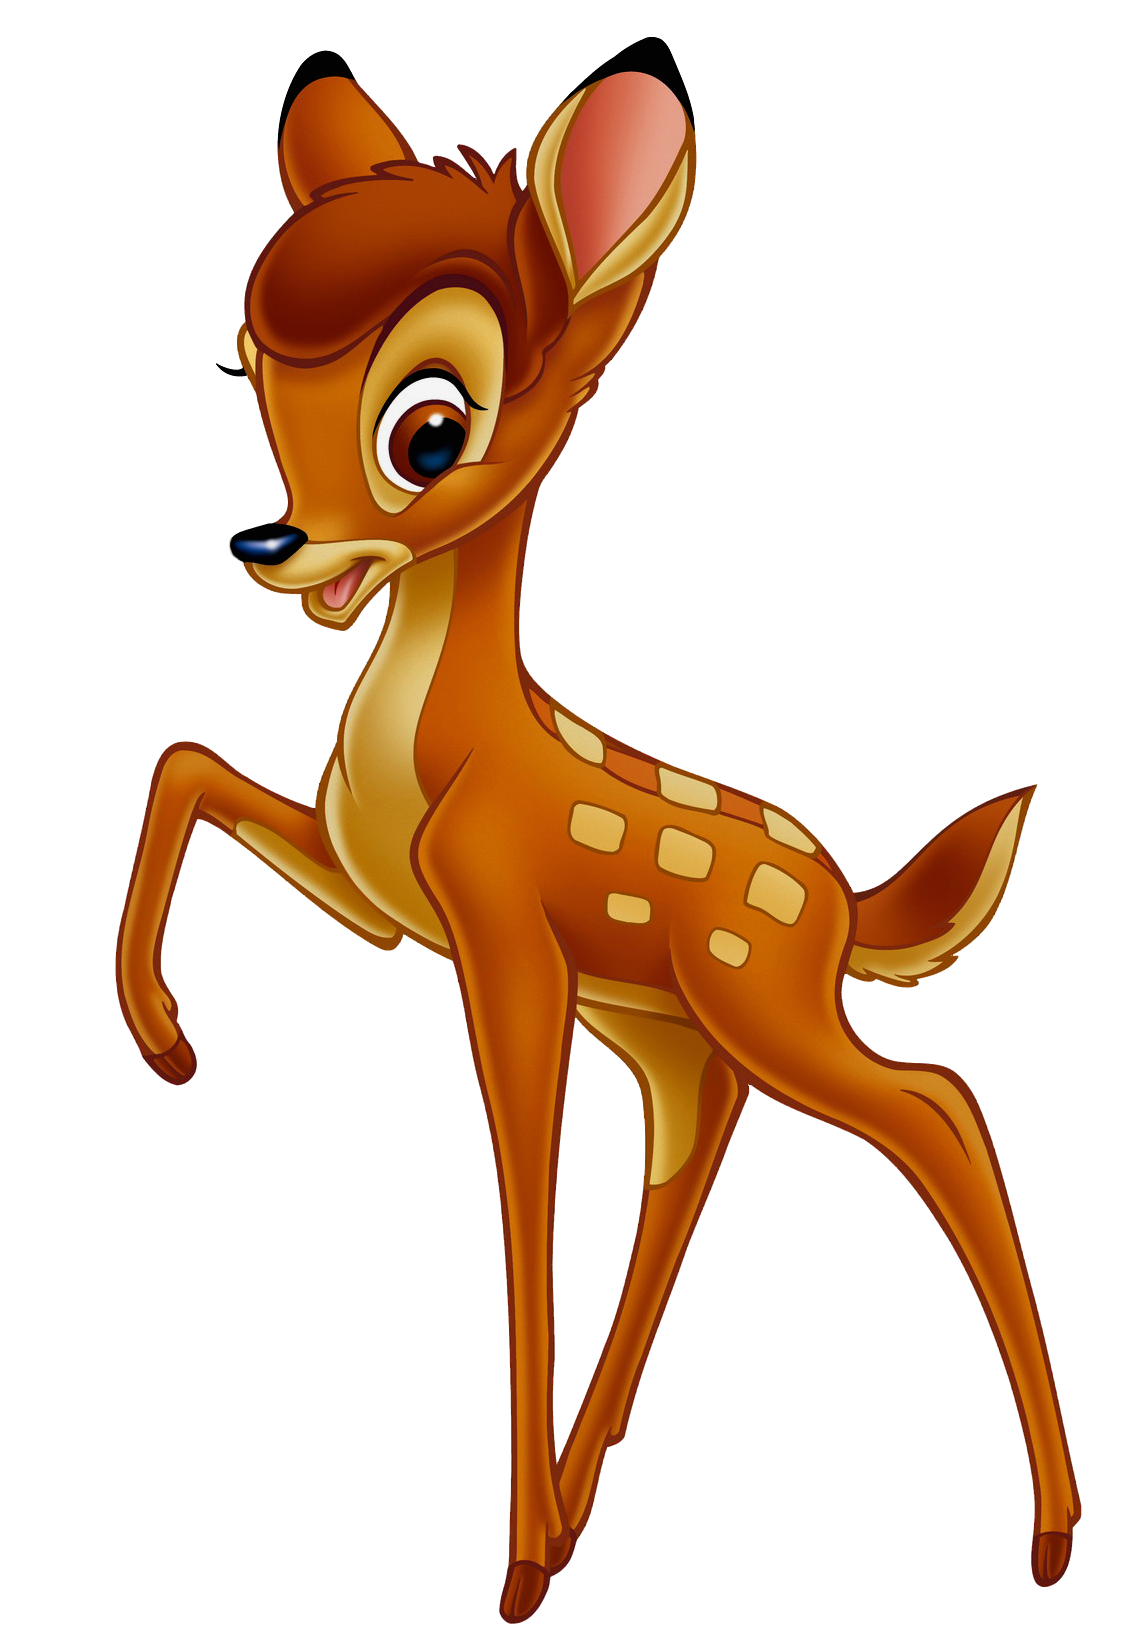 ... Bambi Clipart - clipartall; Bambi | Disney Wiki | Fandom powered by Wikia ...